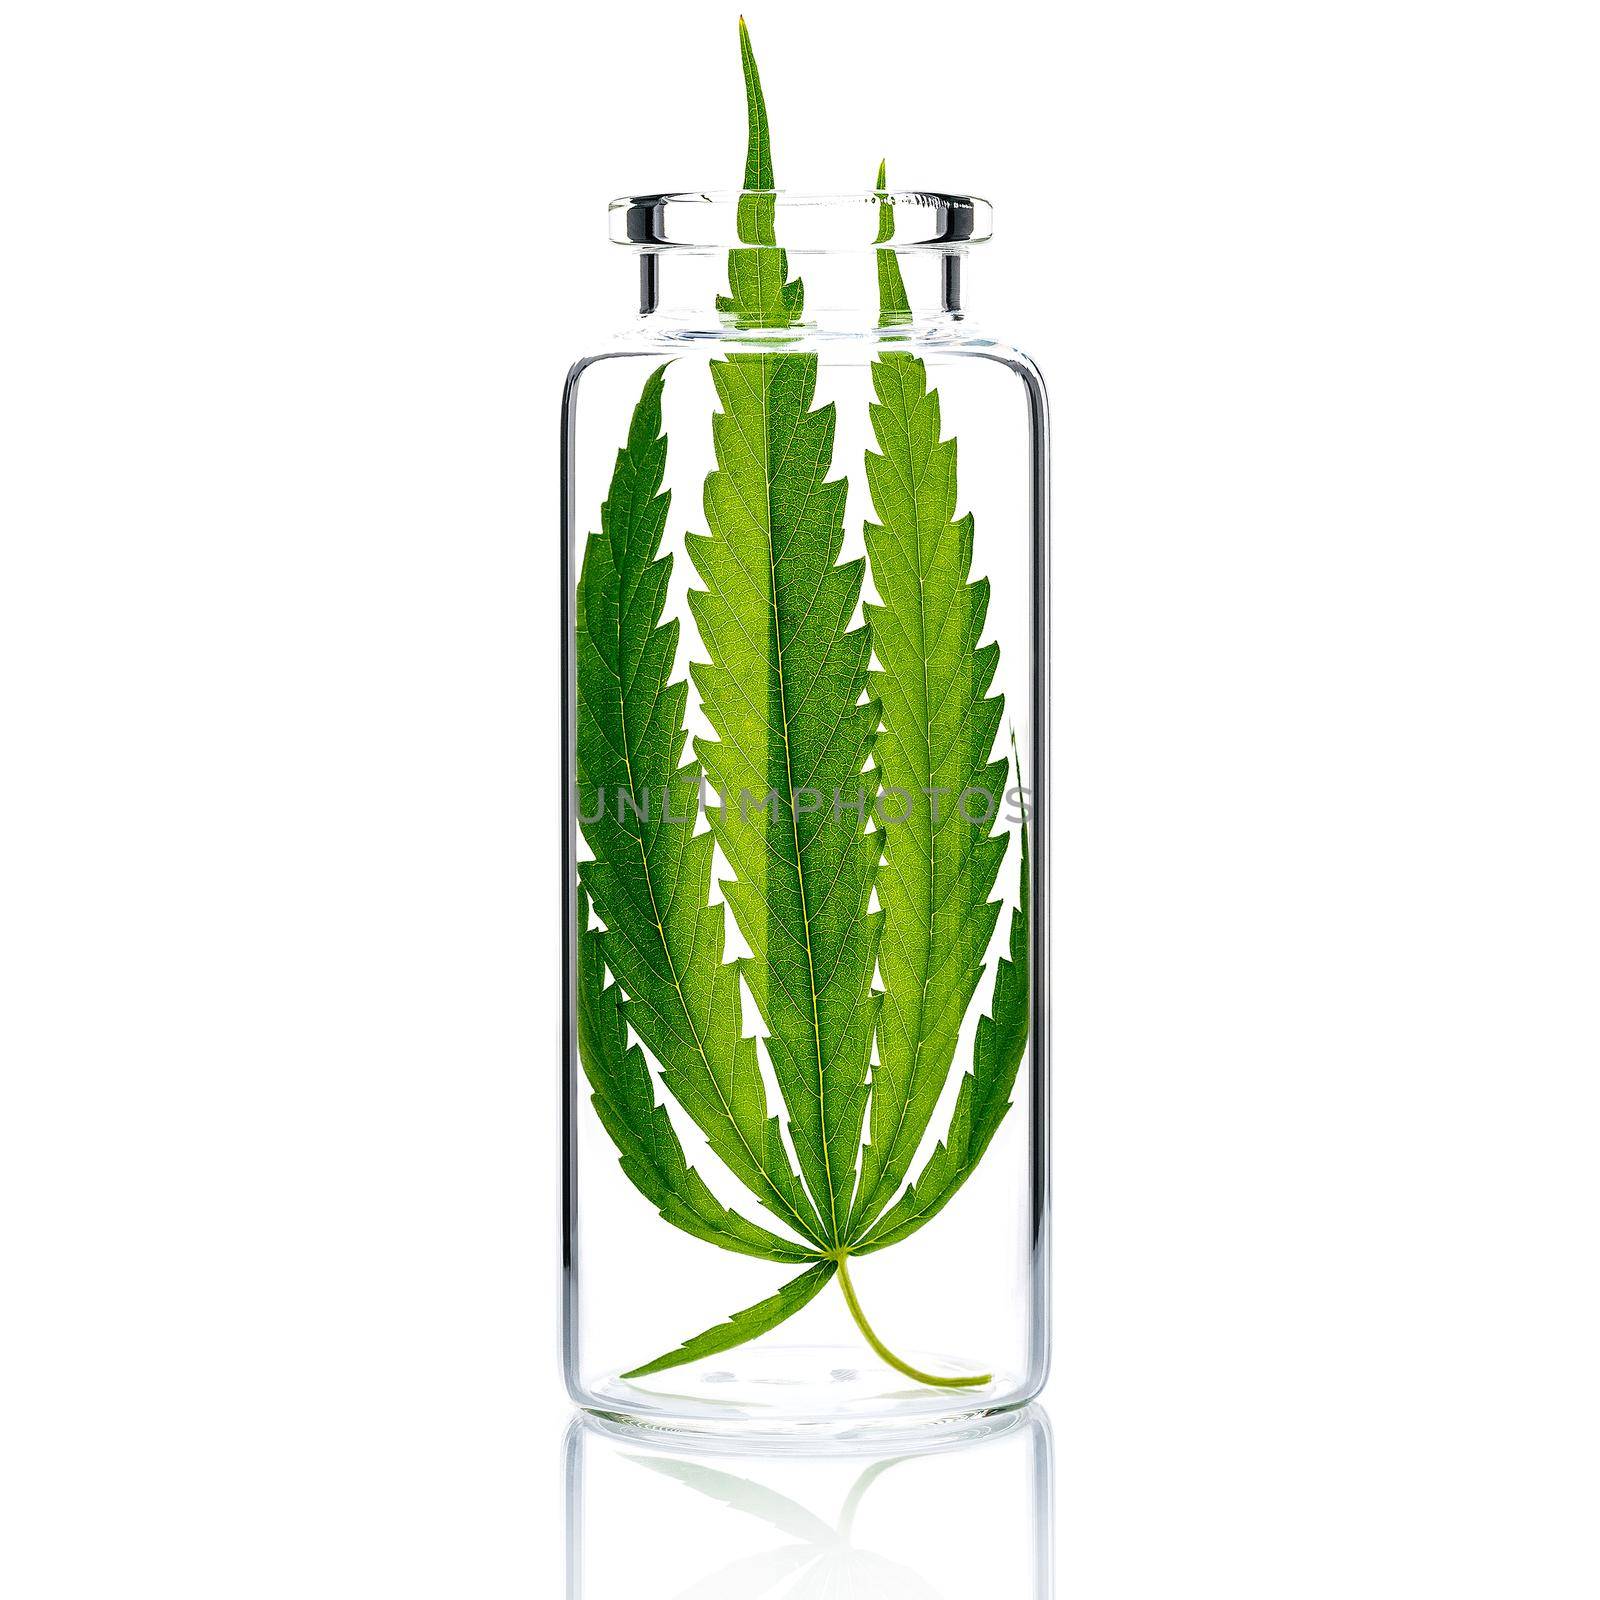 Hemp leaves in glass bottle  isolate on white background. by kerdkanno